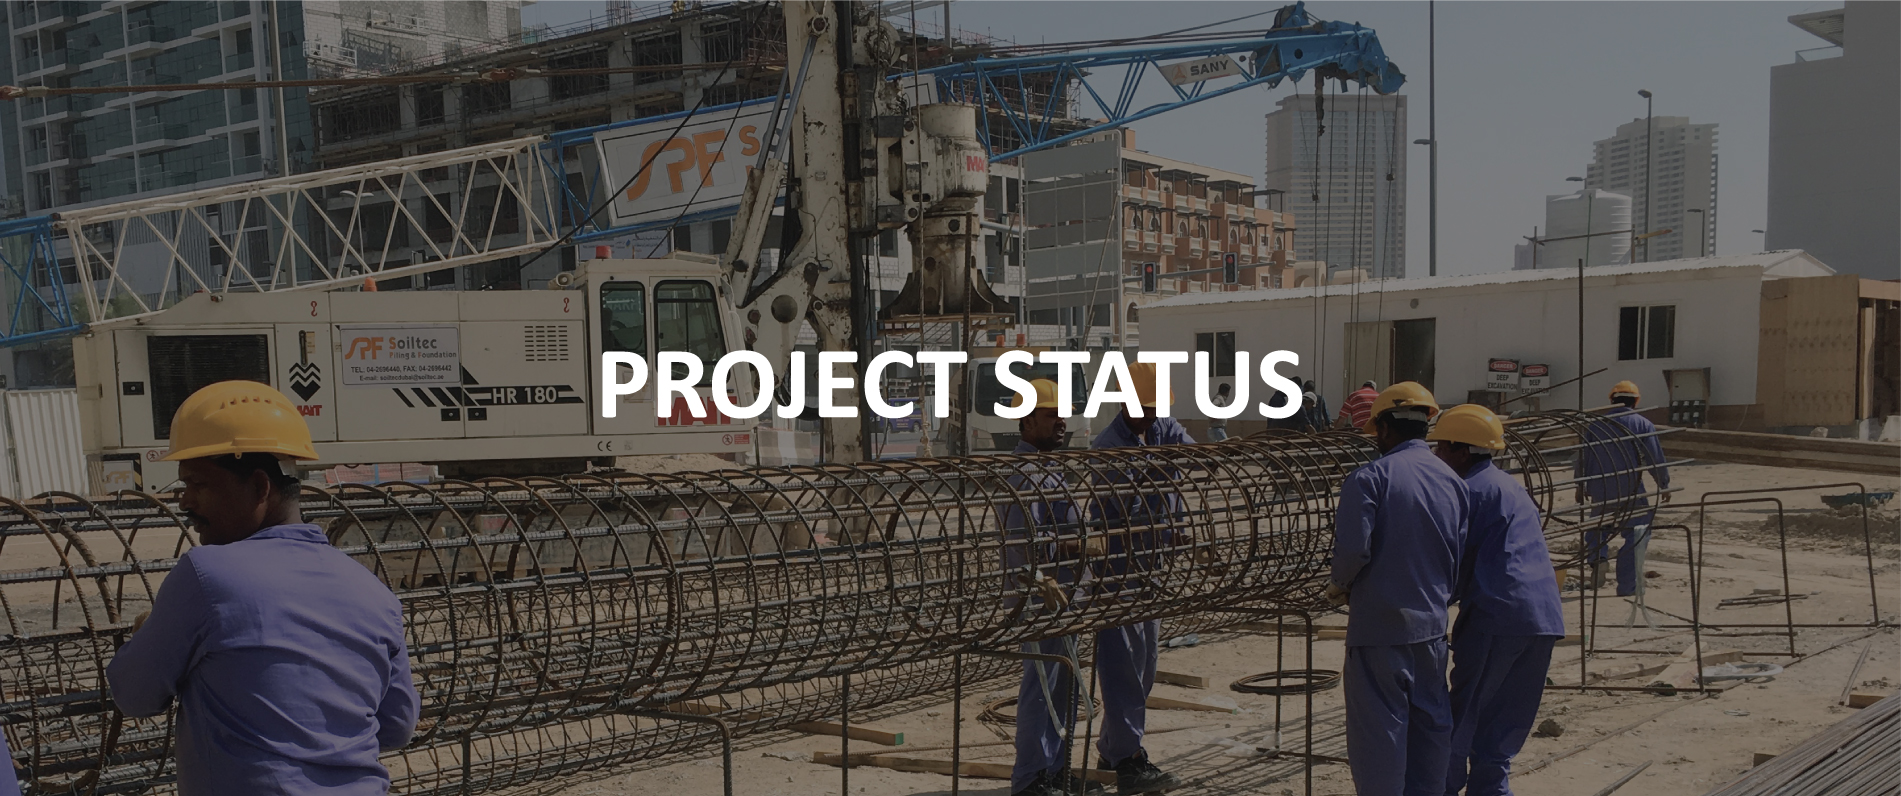 Project-Status-1